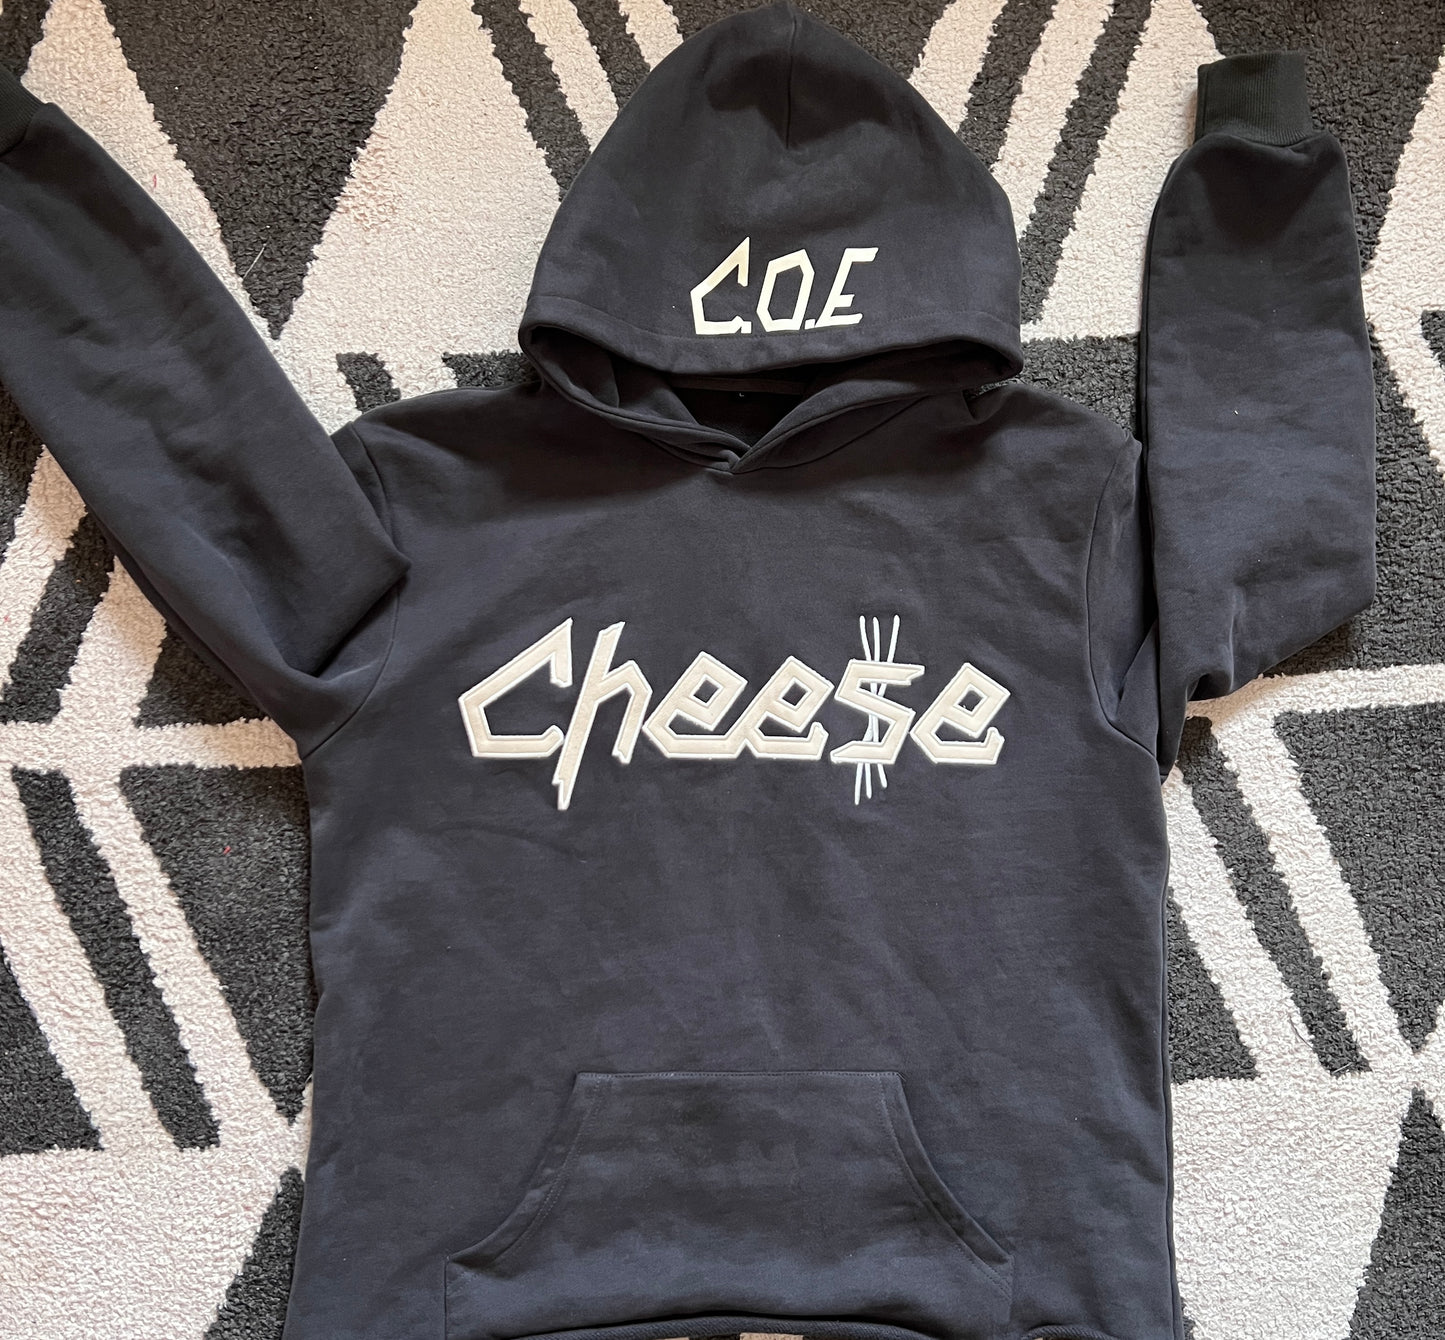 Chee$e hoodie